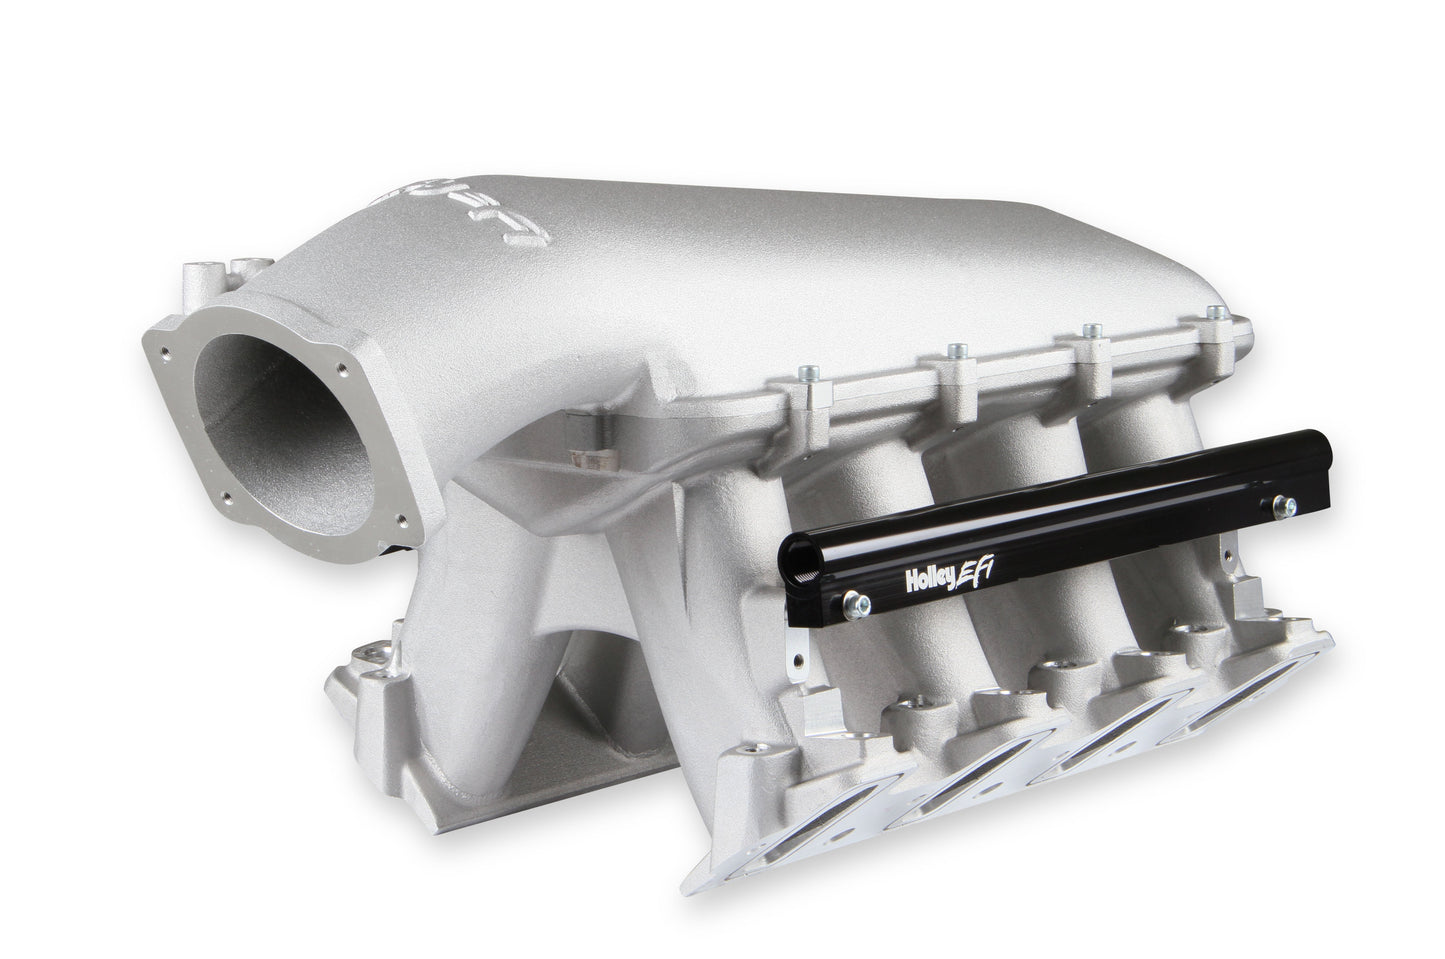 Holley Hi-Ram Intake -105mm throttle body flange- GM LS3/L92